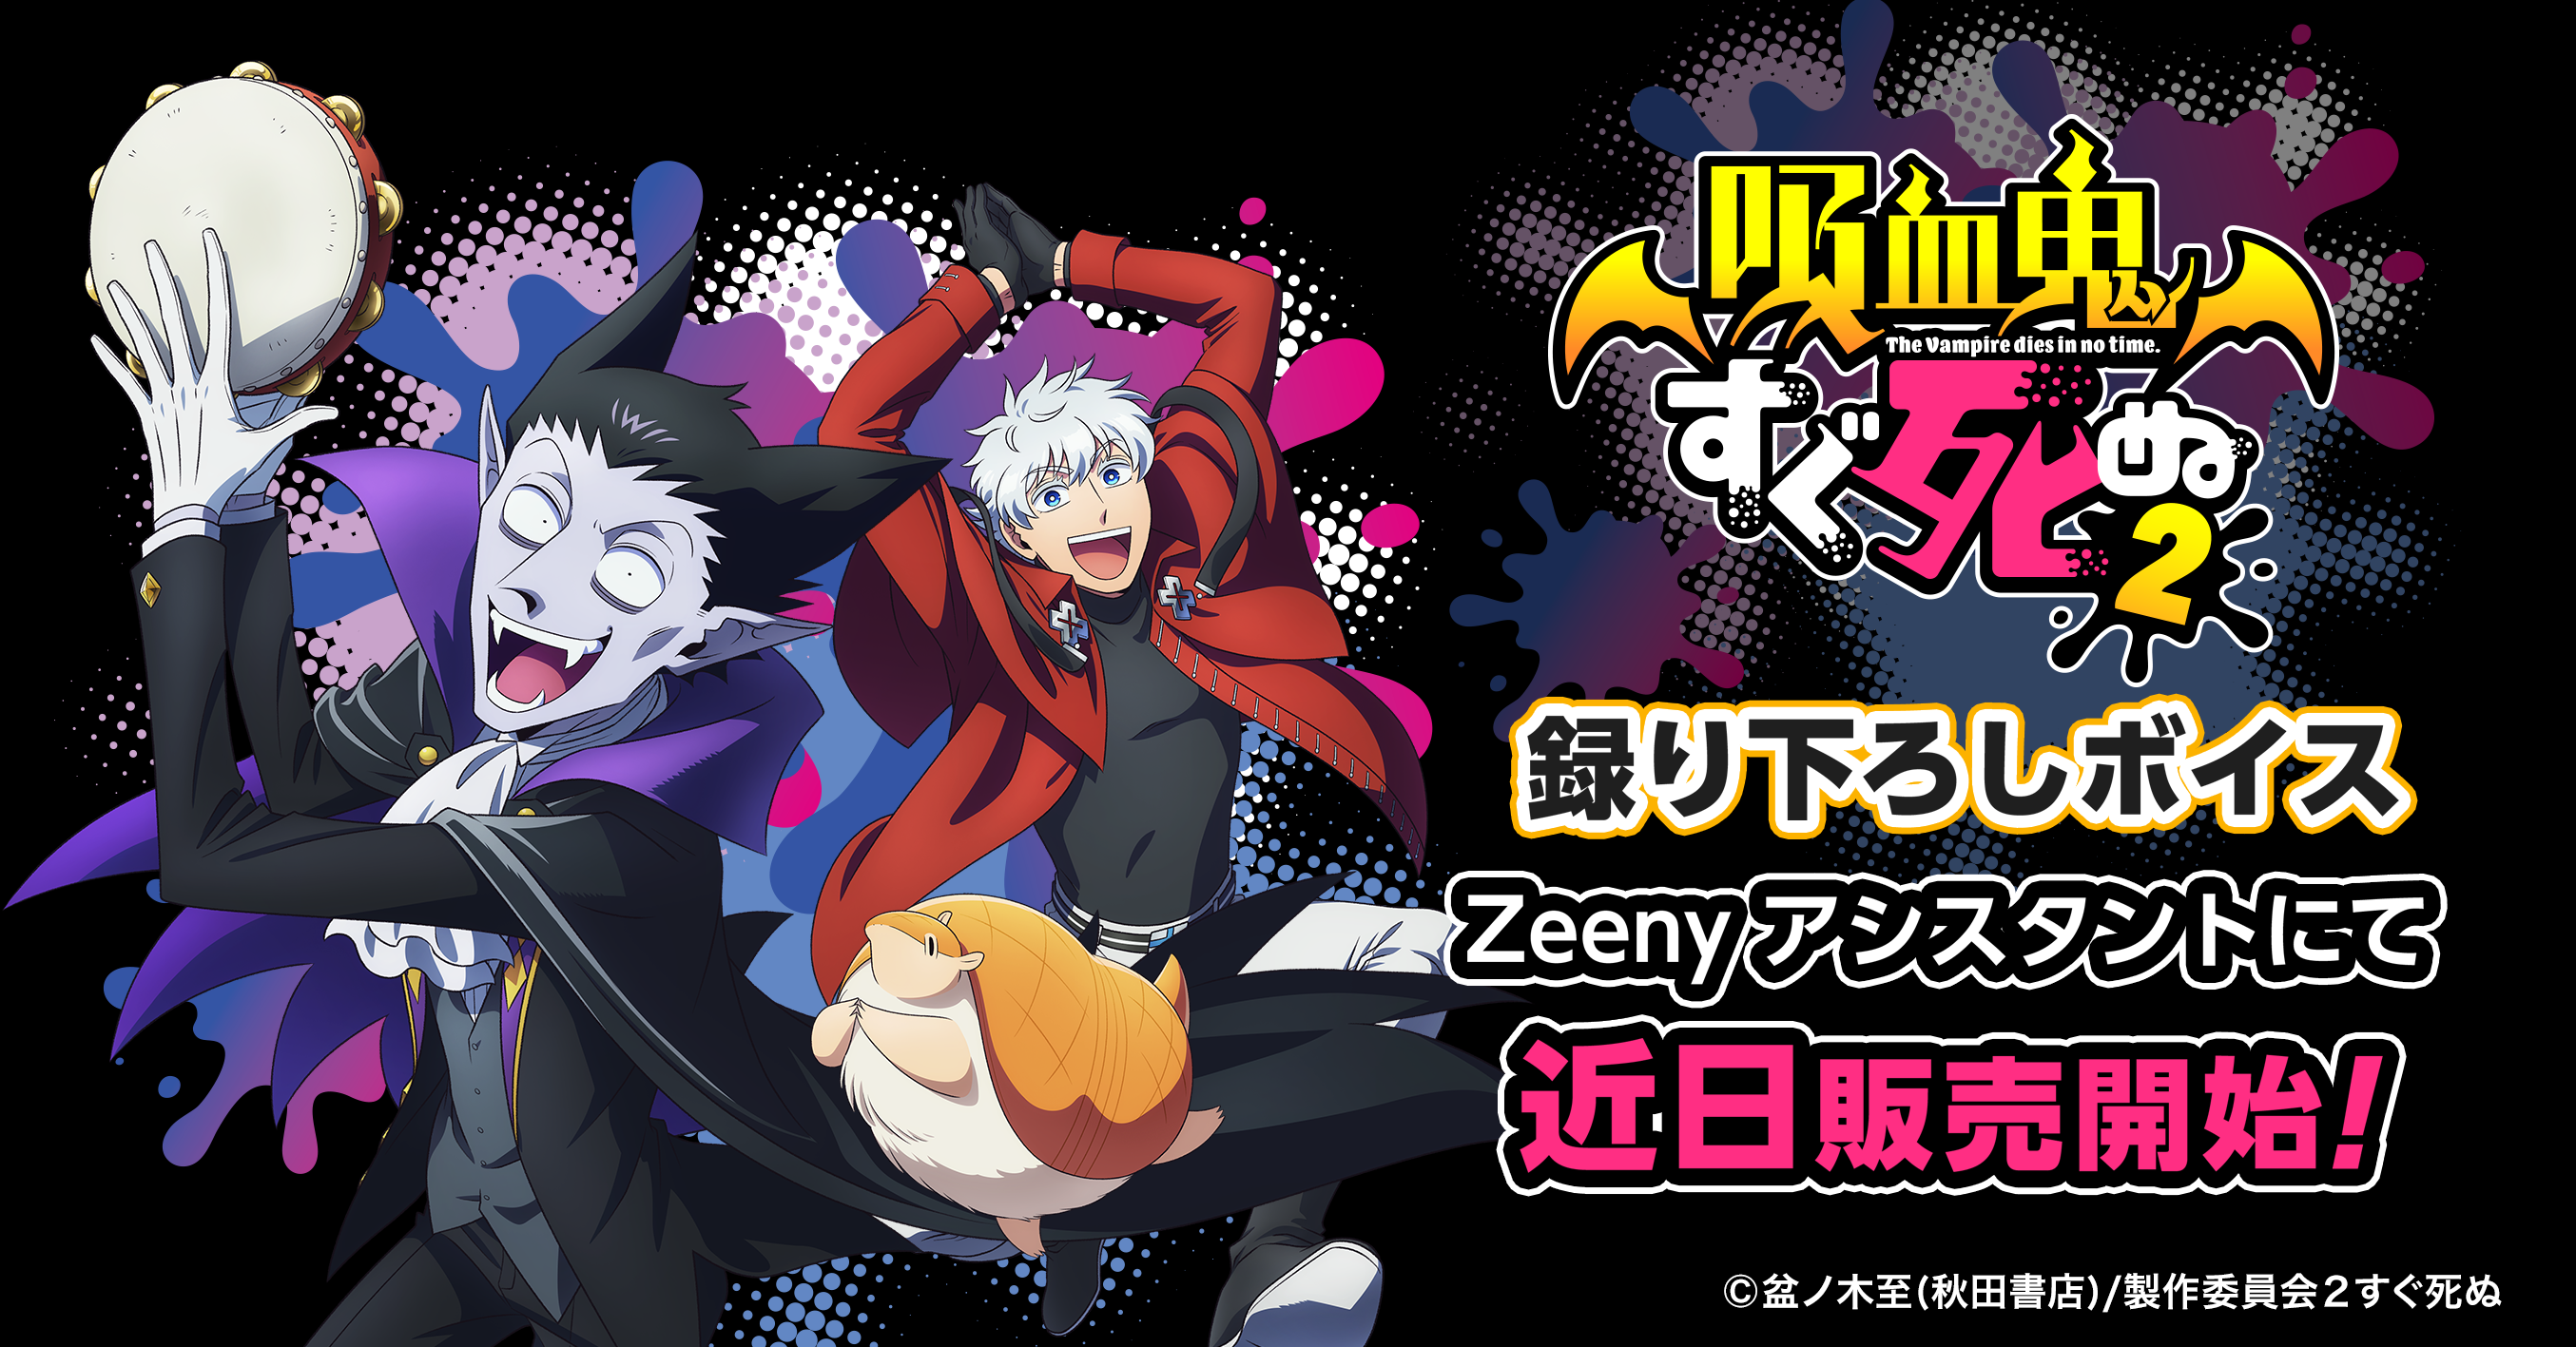 TVアニメ「吸血鬼すぐ死ぬ2」×「Zeeny Lights 3」「Zeeny アシスタント」アプリ